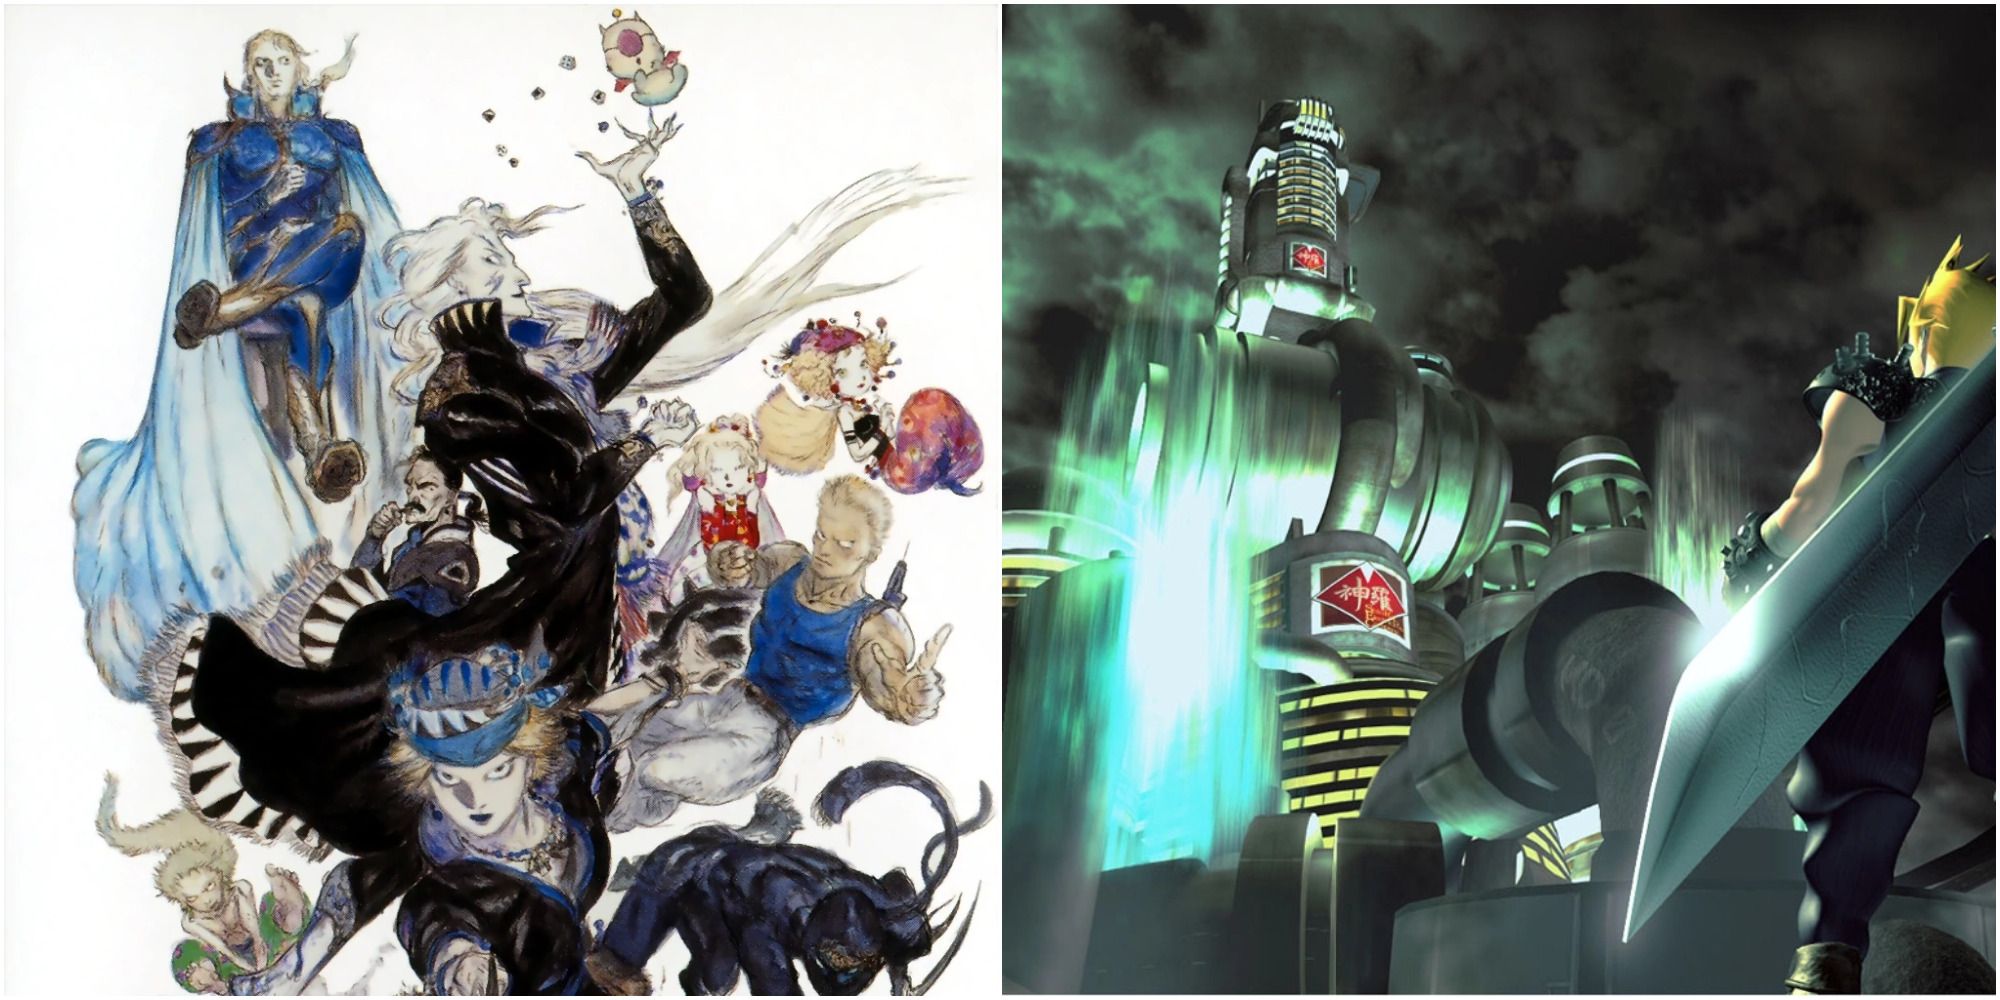 Final Fantasy VI and Final Fantasy VII